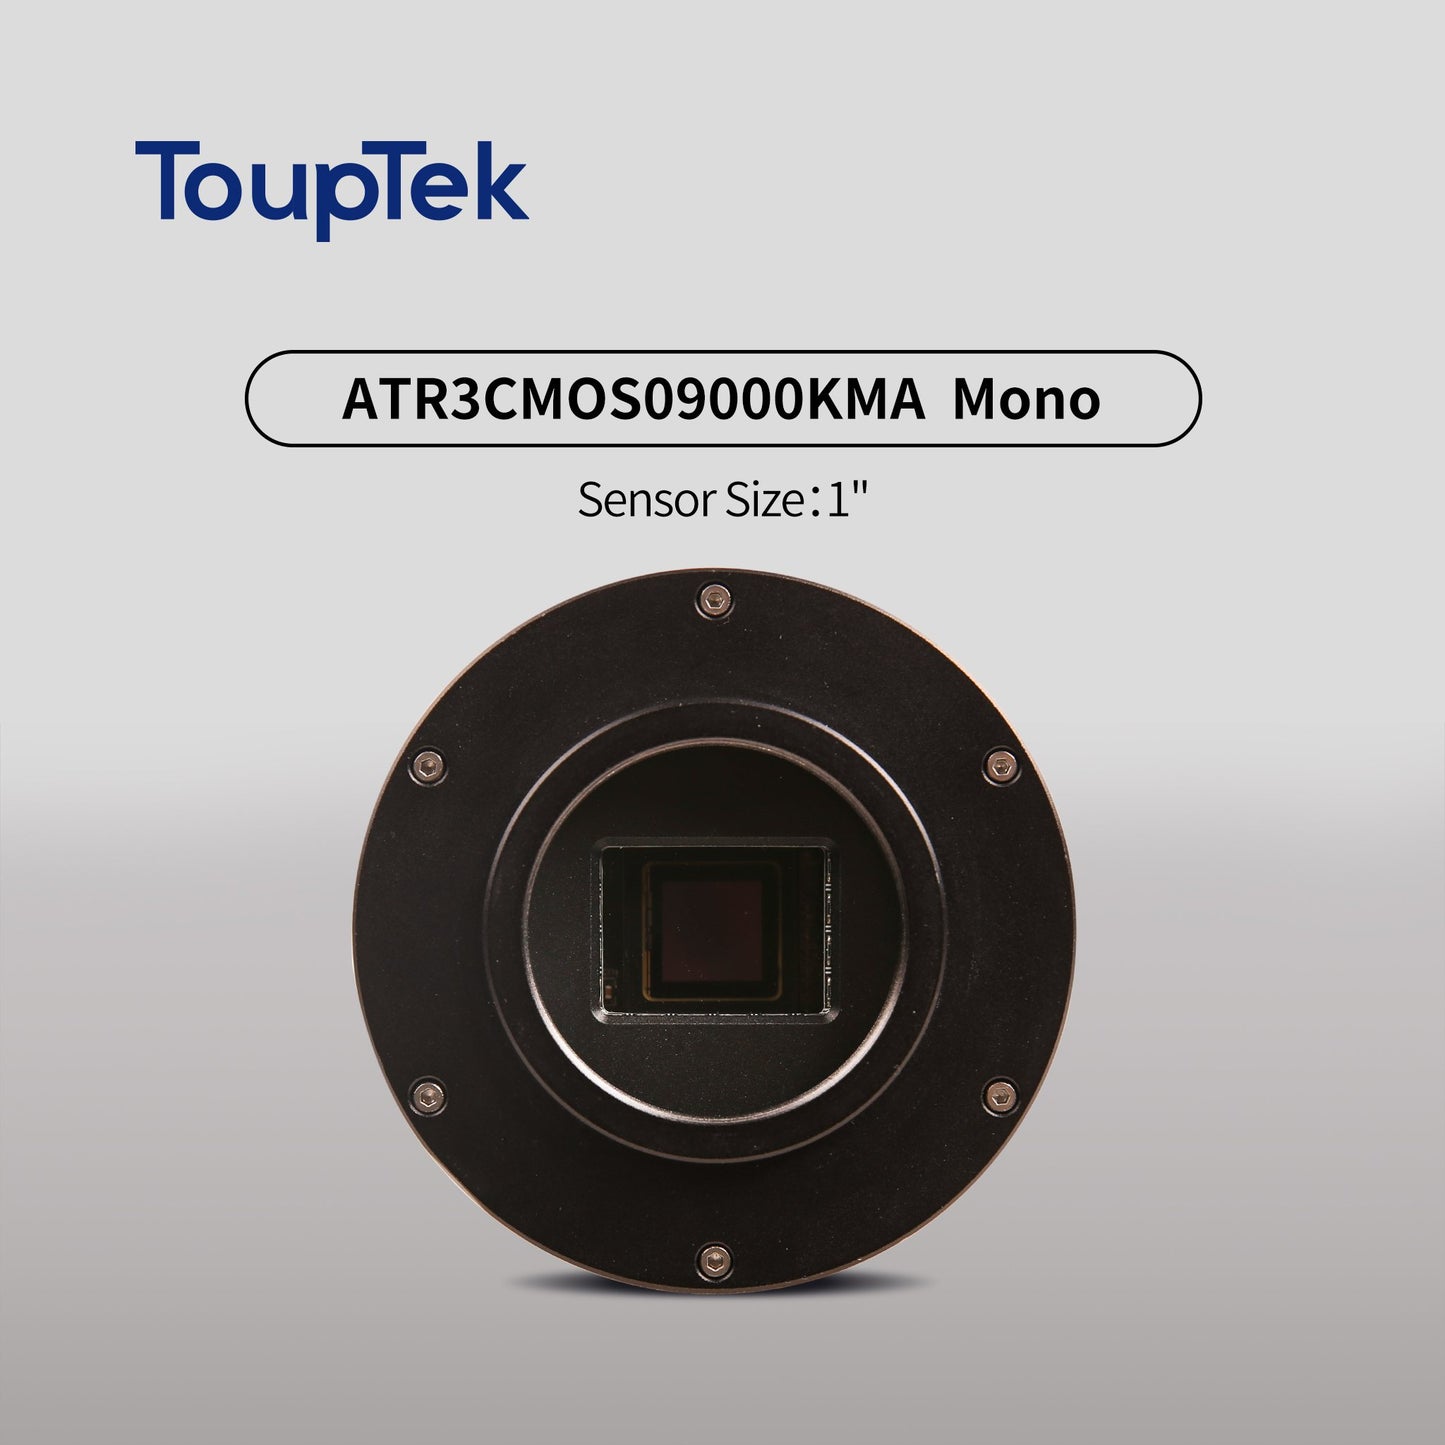 ATR3CMOS09000KMA IMX533M Mono Camera